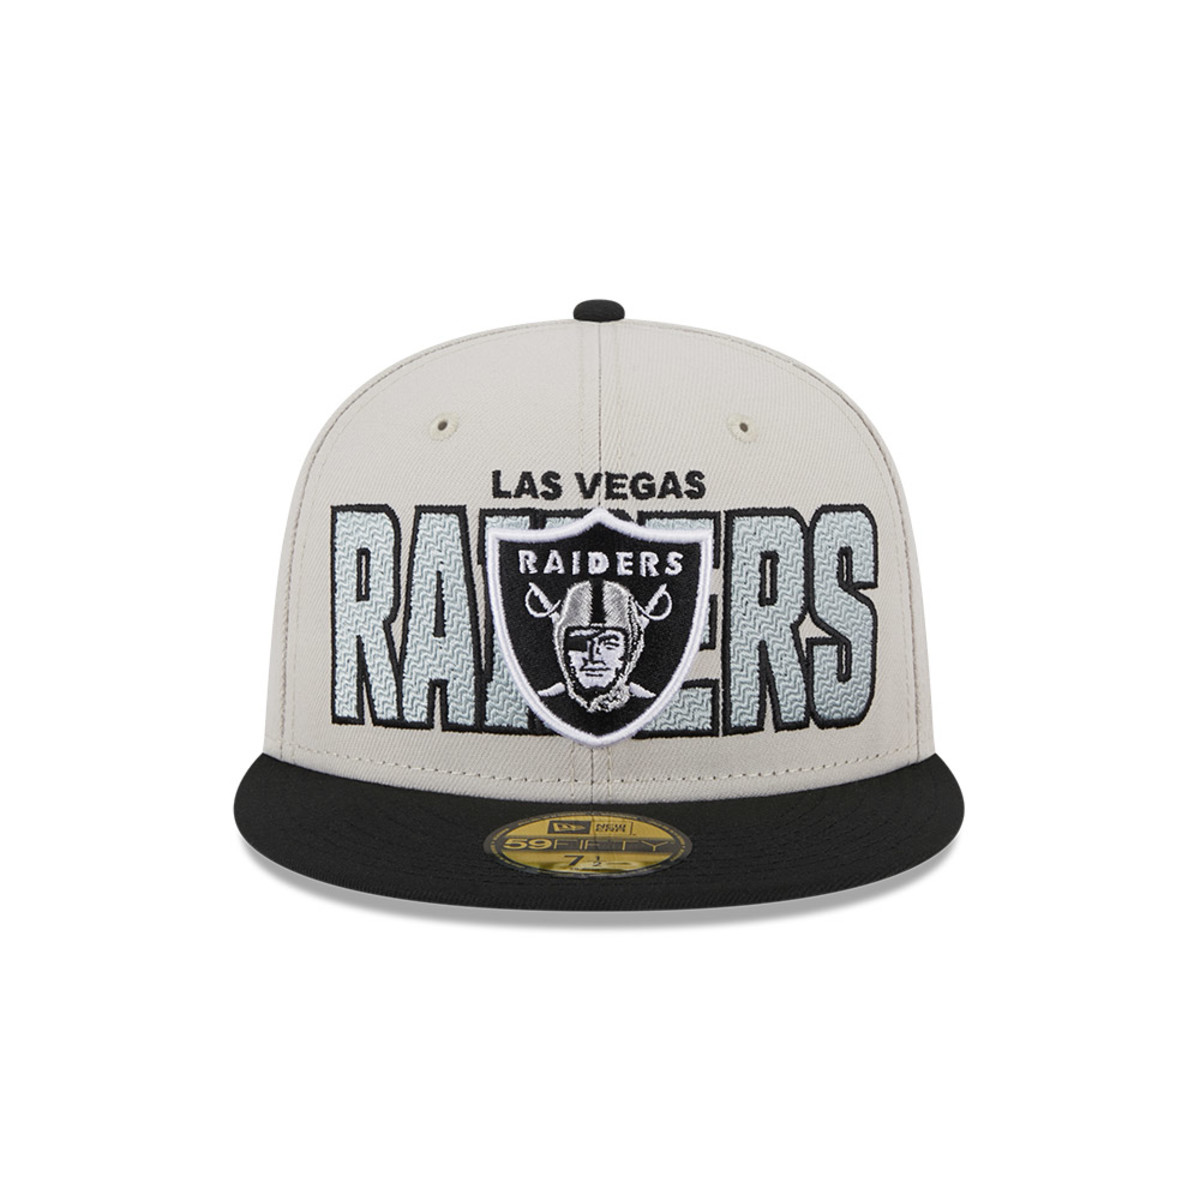 Las Vegas Raiders added a new photo. - Las Vegas Raiders